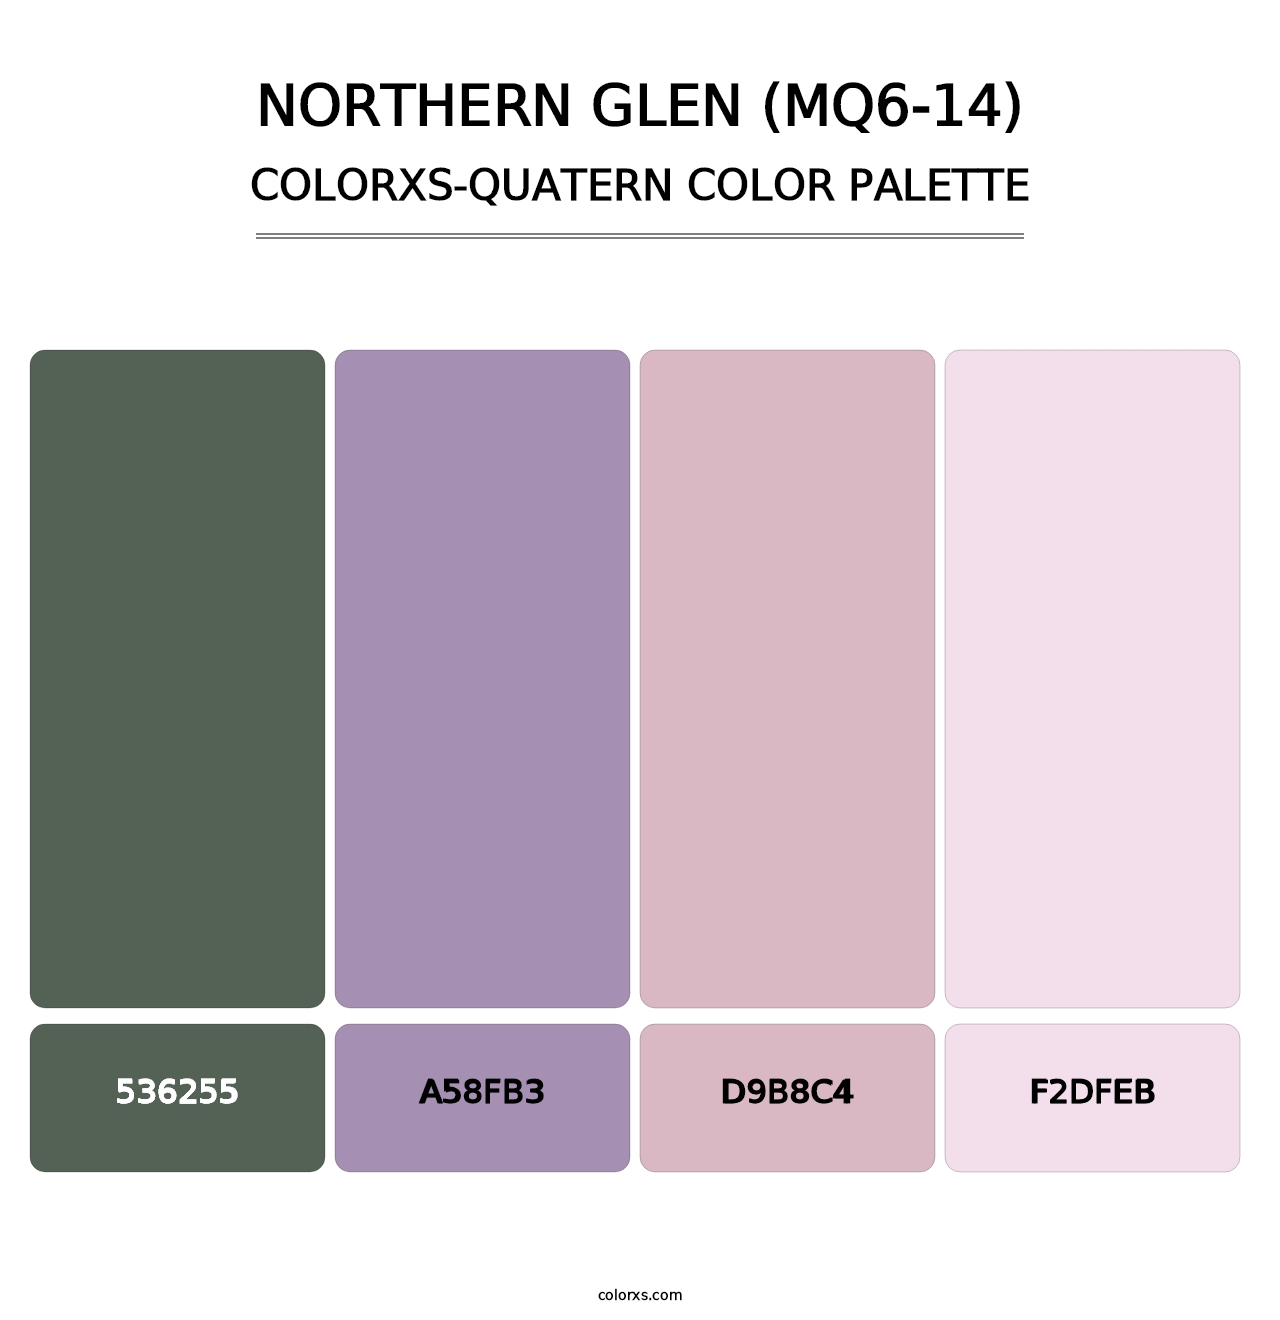 Northern Glen (MQ6-14) - Colorxs Quatern Palette